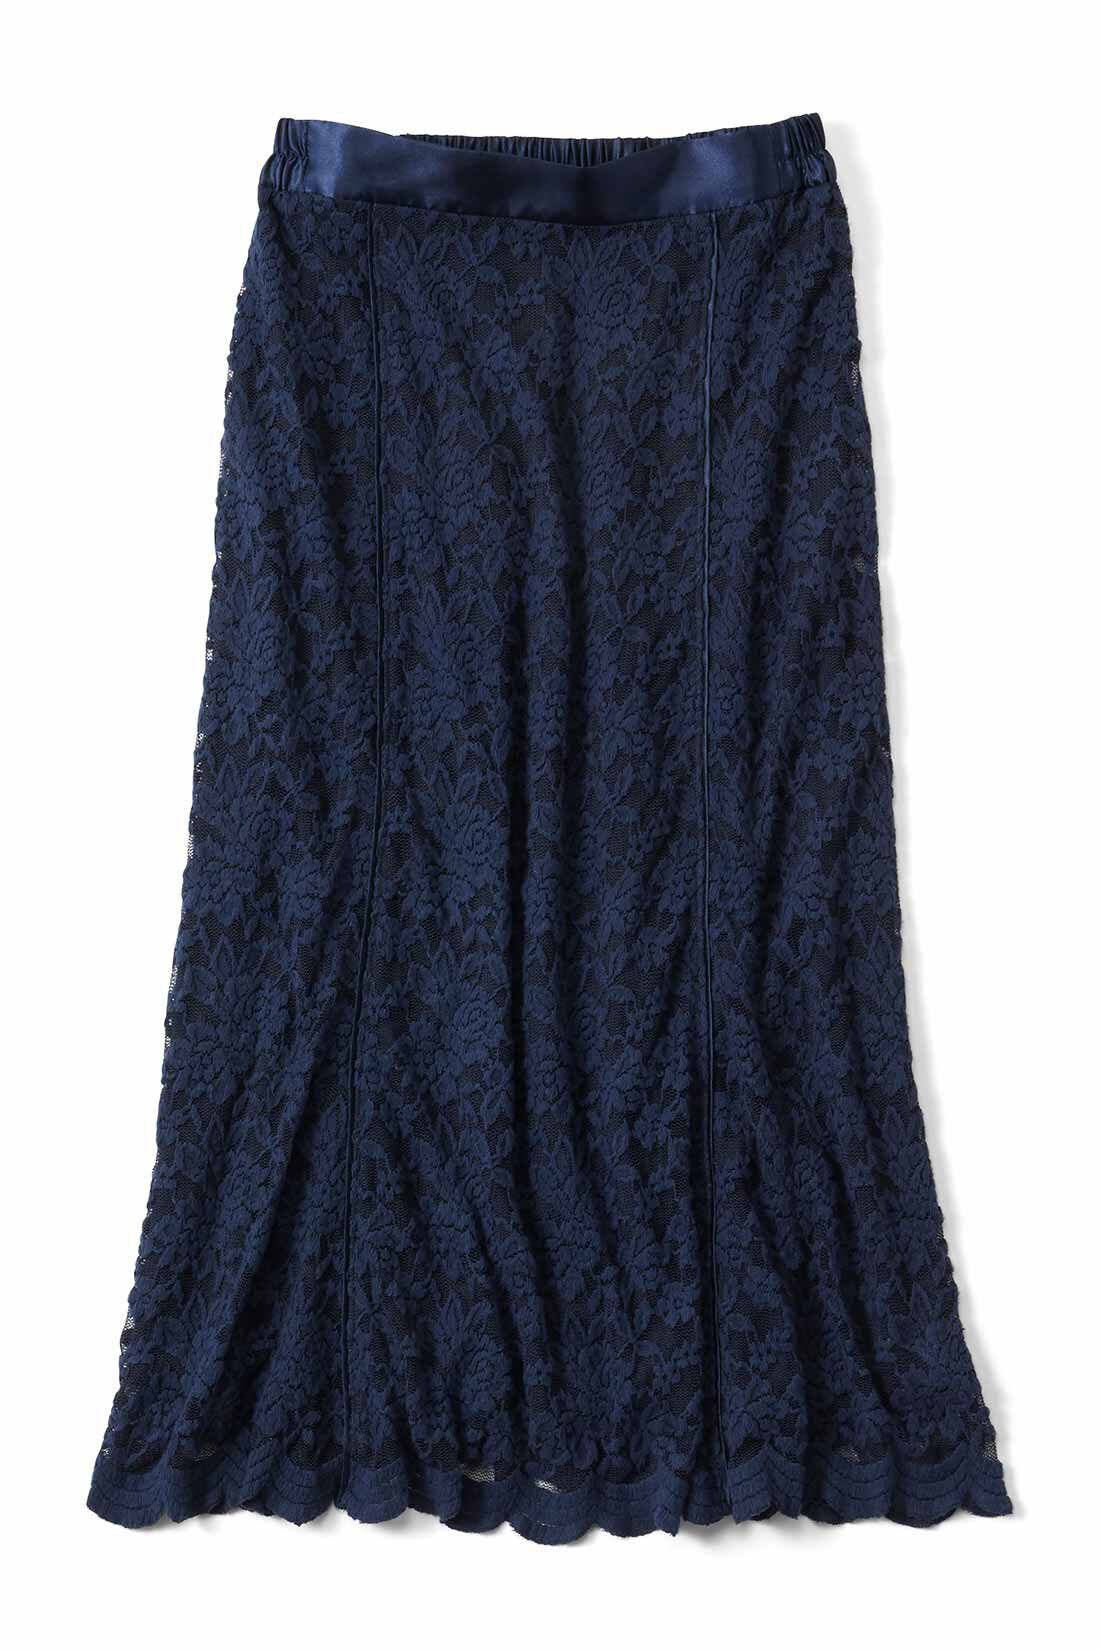 IEDIT|IEDIT[イディット]　帯電防止インナーがうれしい 起毛レーススカート〈ネイビー〉|ネイビー サテンテープの切り替えが作るきれいな縦長シルエットが魅力。